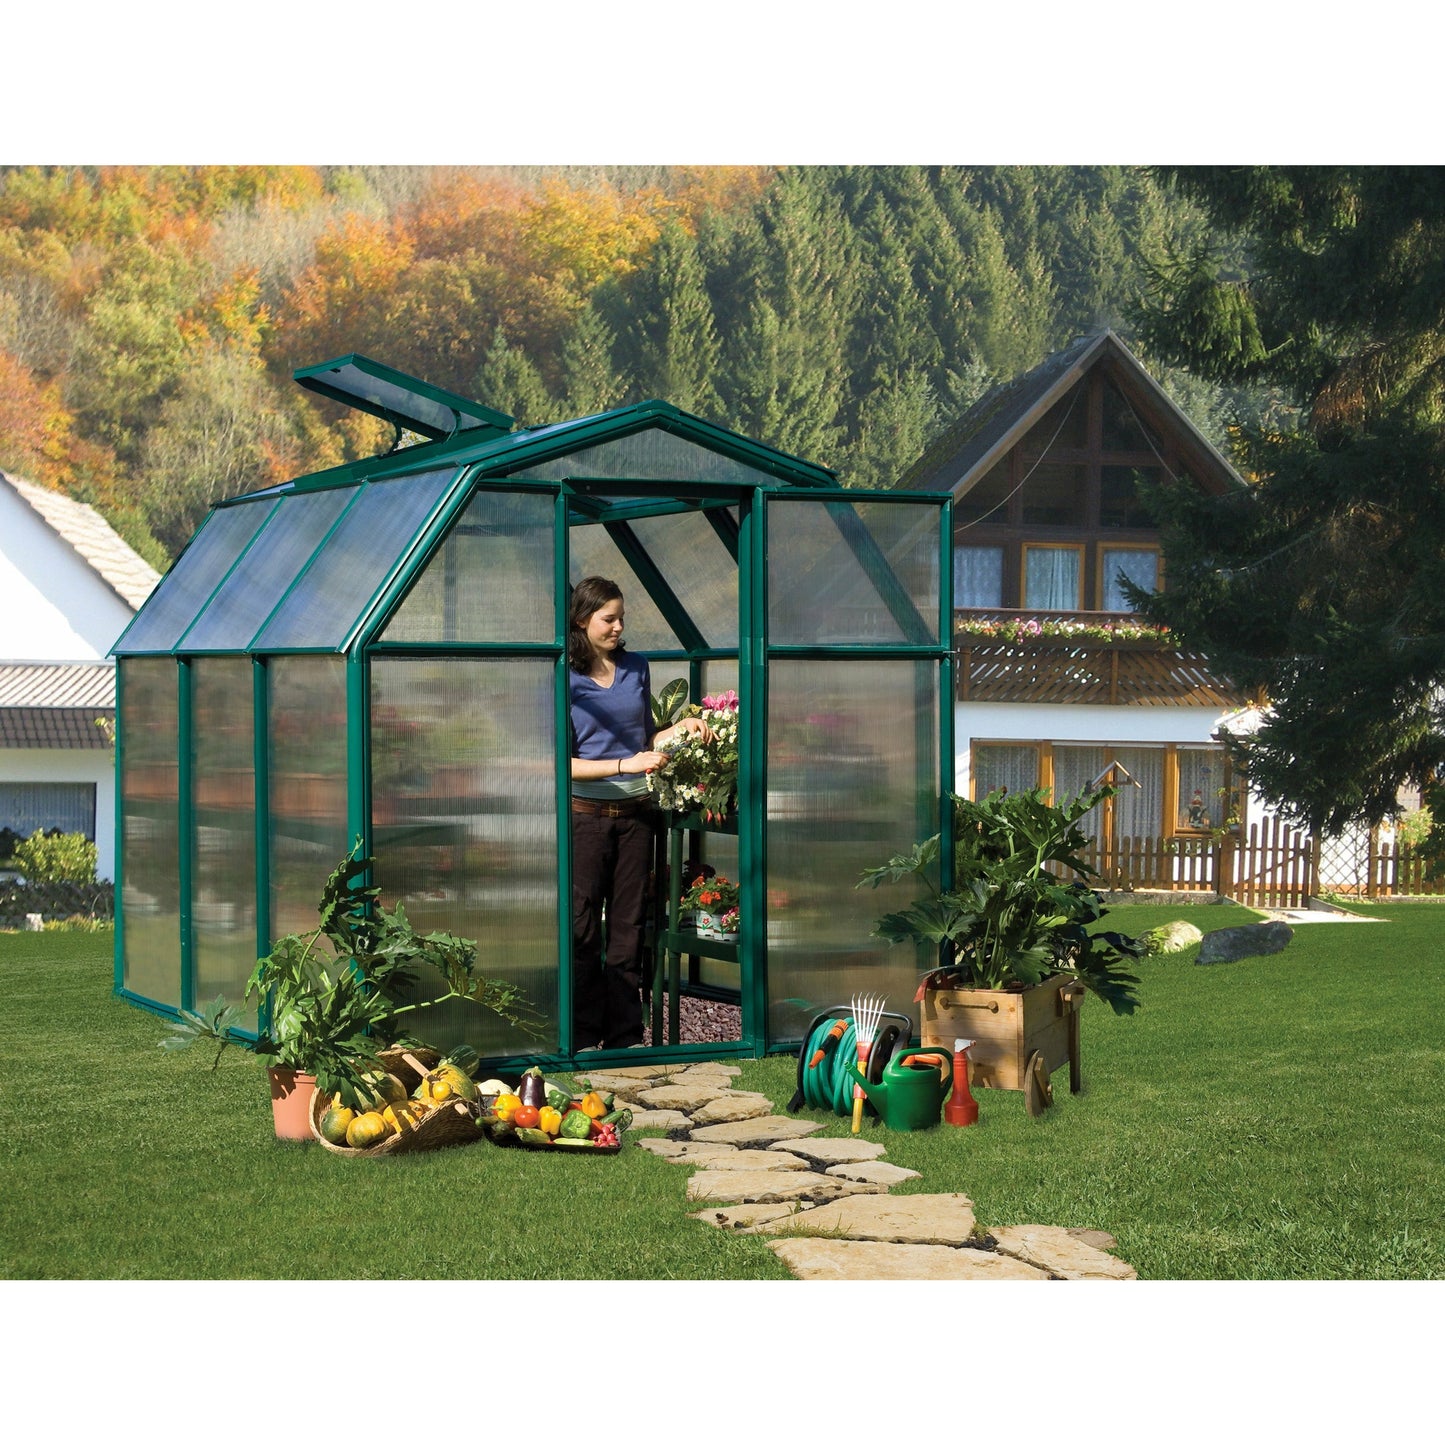 Rion EcoGrow 6' x 6' Greenhouse